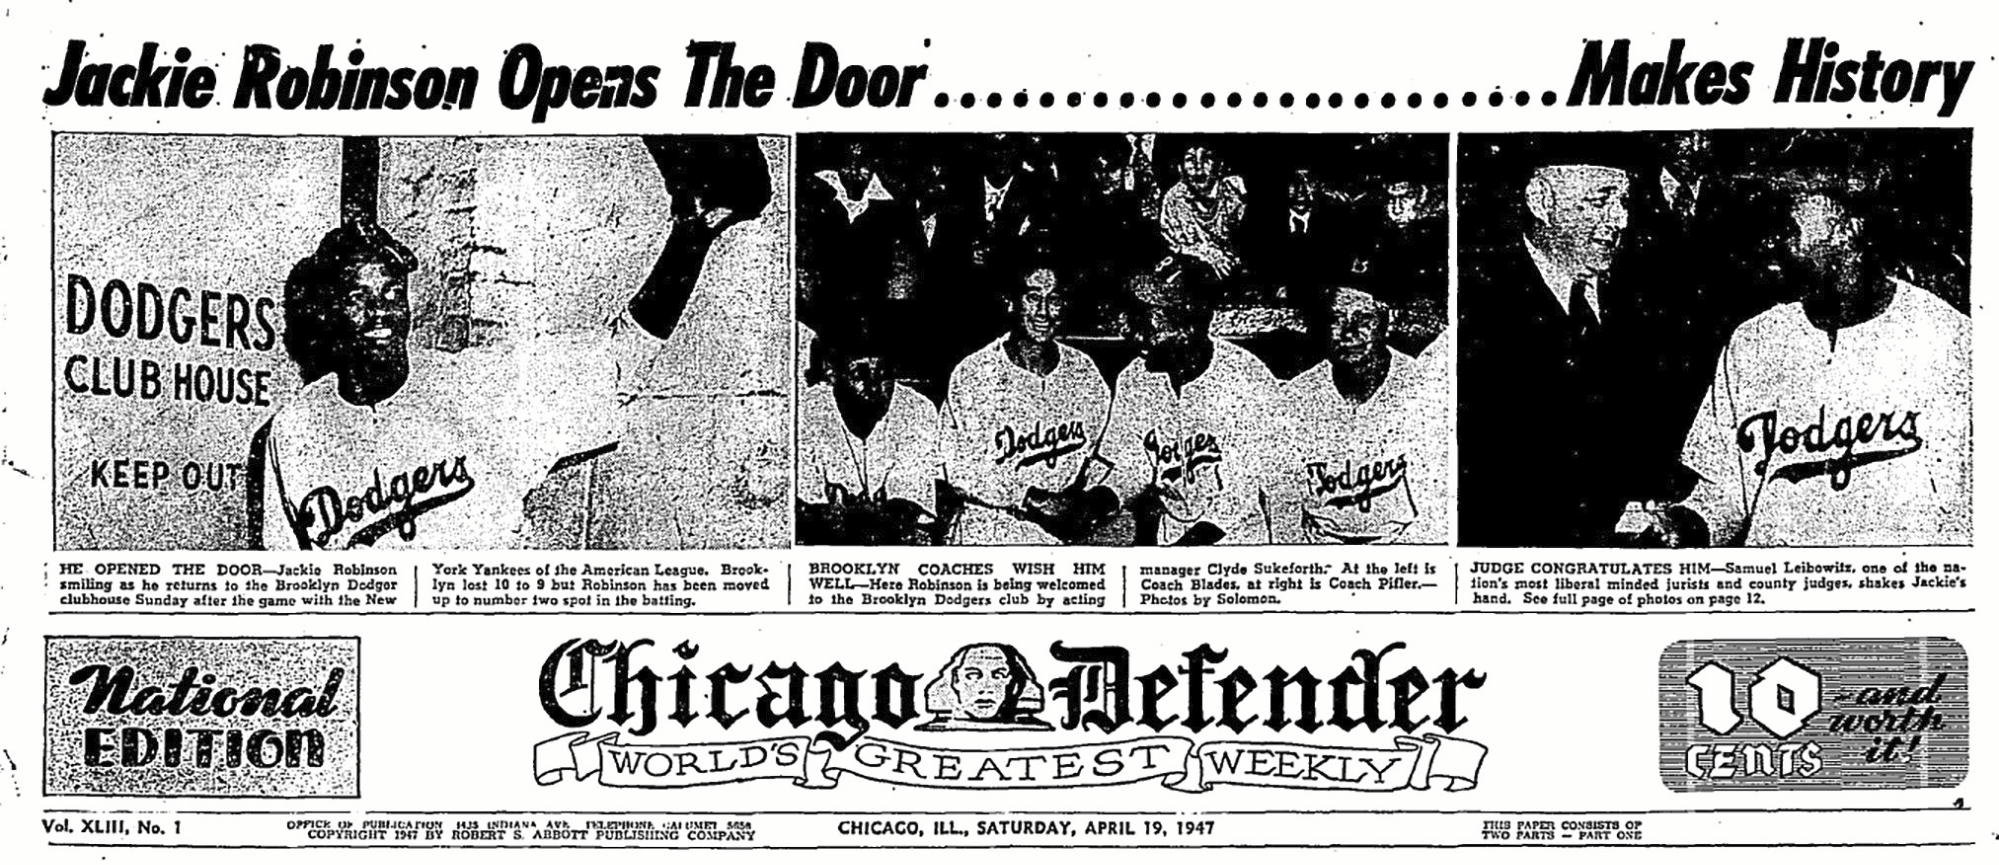 Chicago Defender headline showing Jackie Robinson